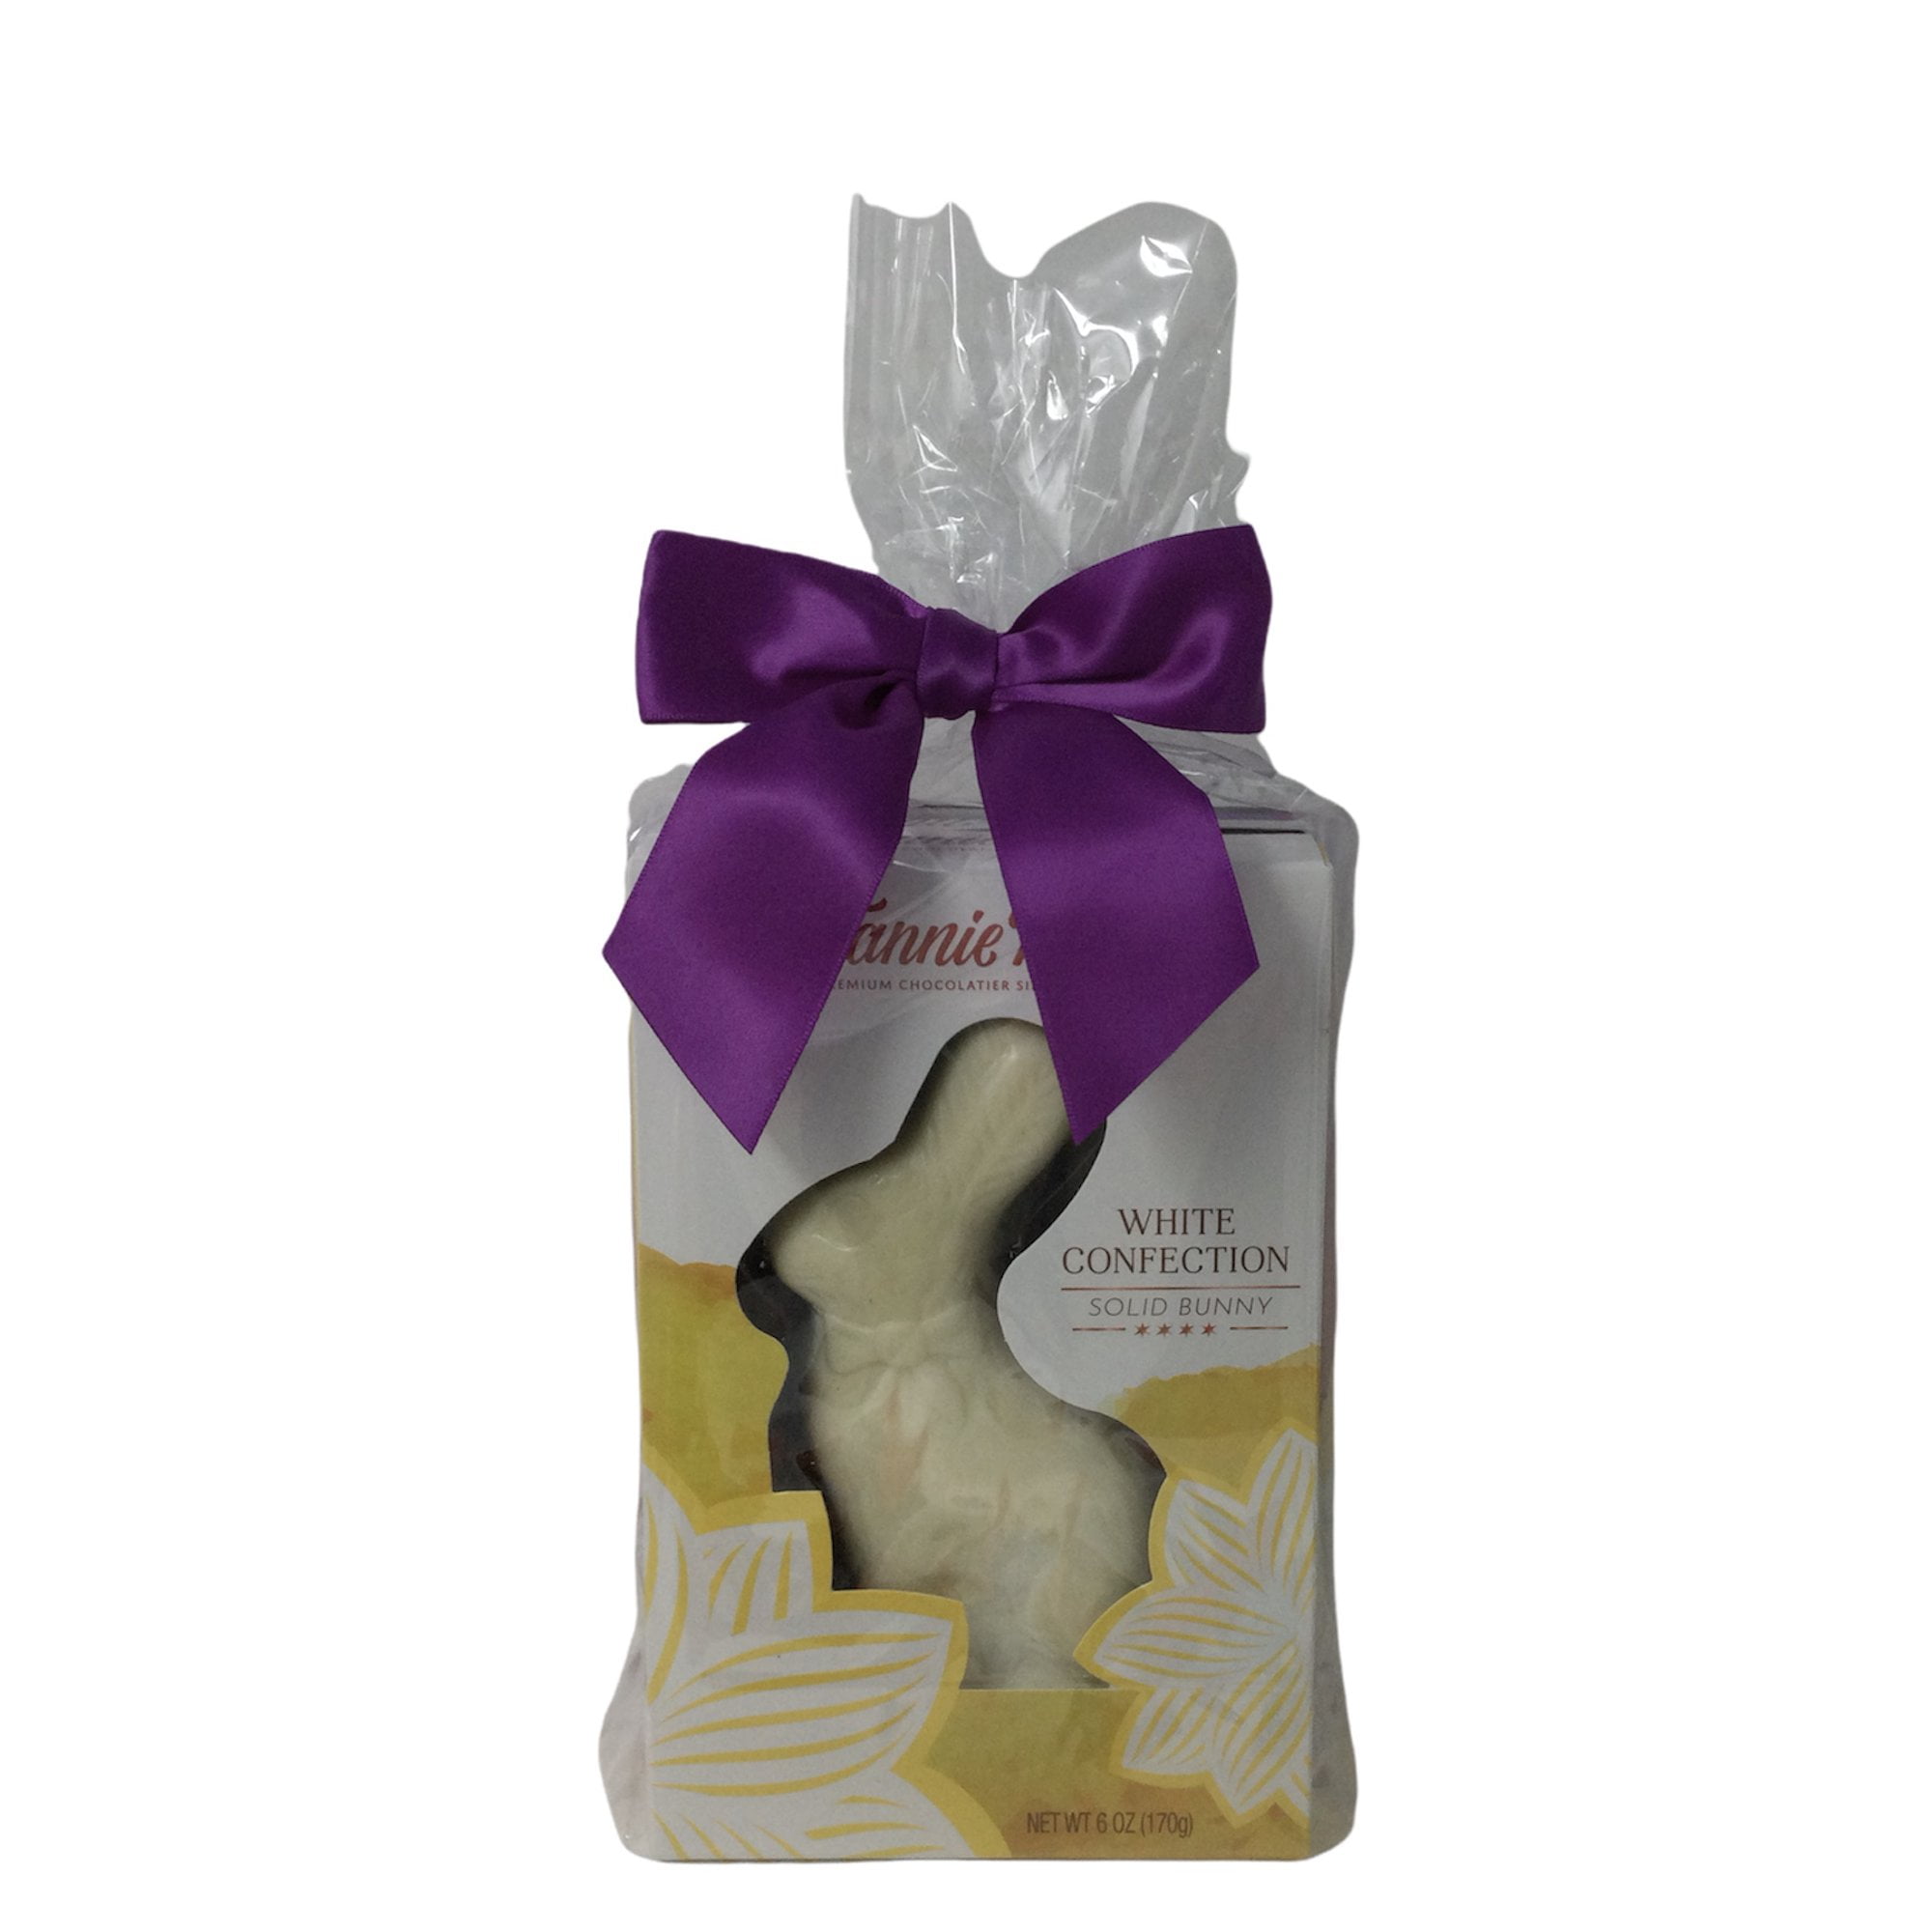 Fannie May Easter Basket Bunny Gift Bundle Features Dark White Milk